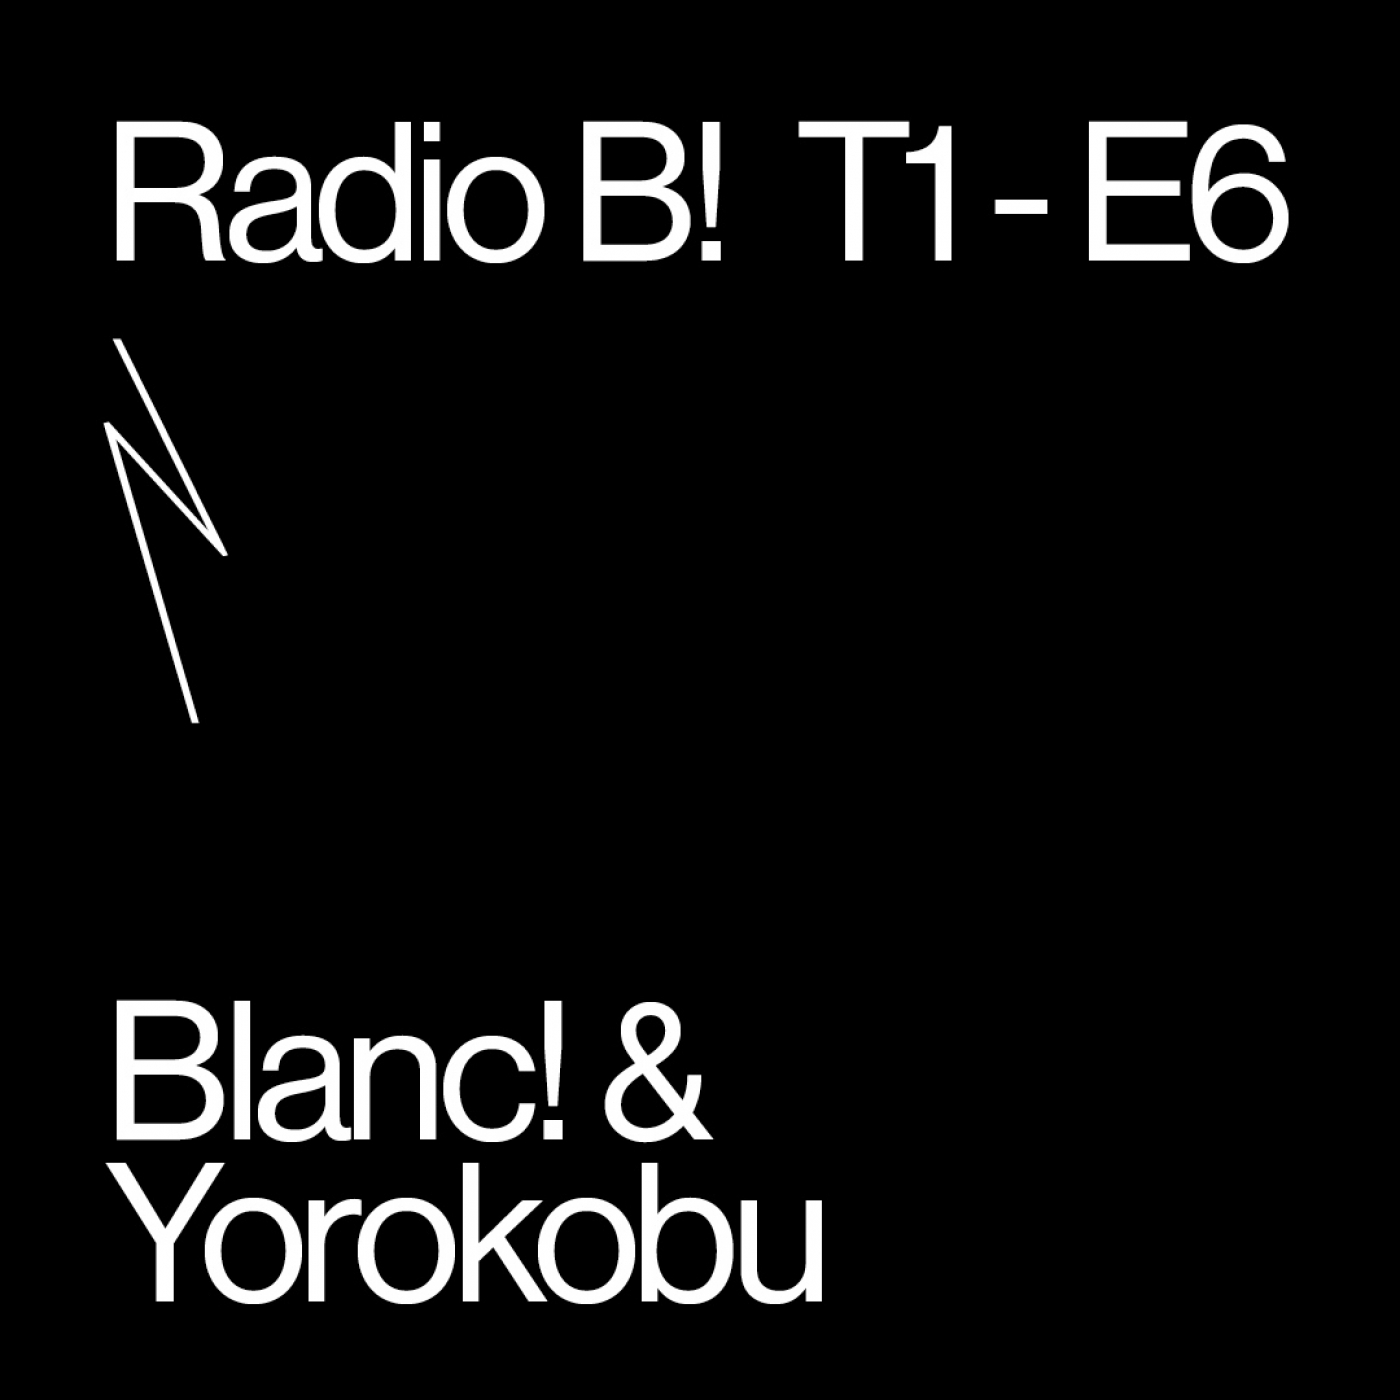 #6 | Blanc! & Yorokobu